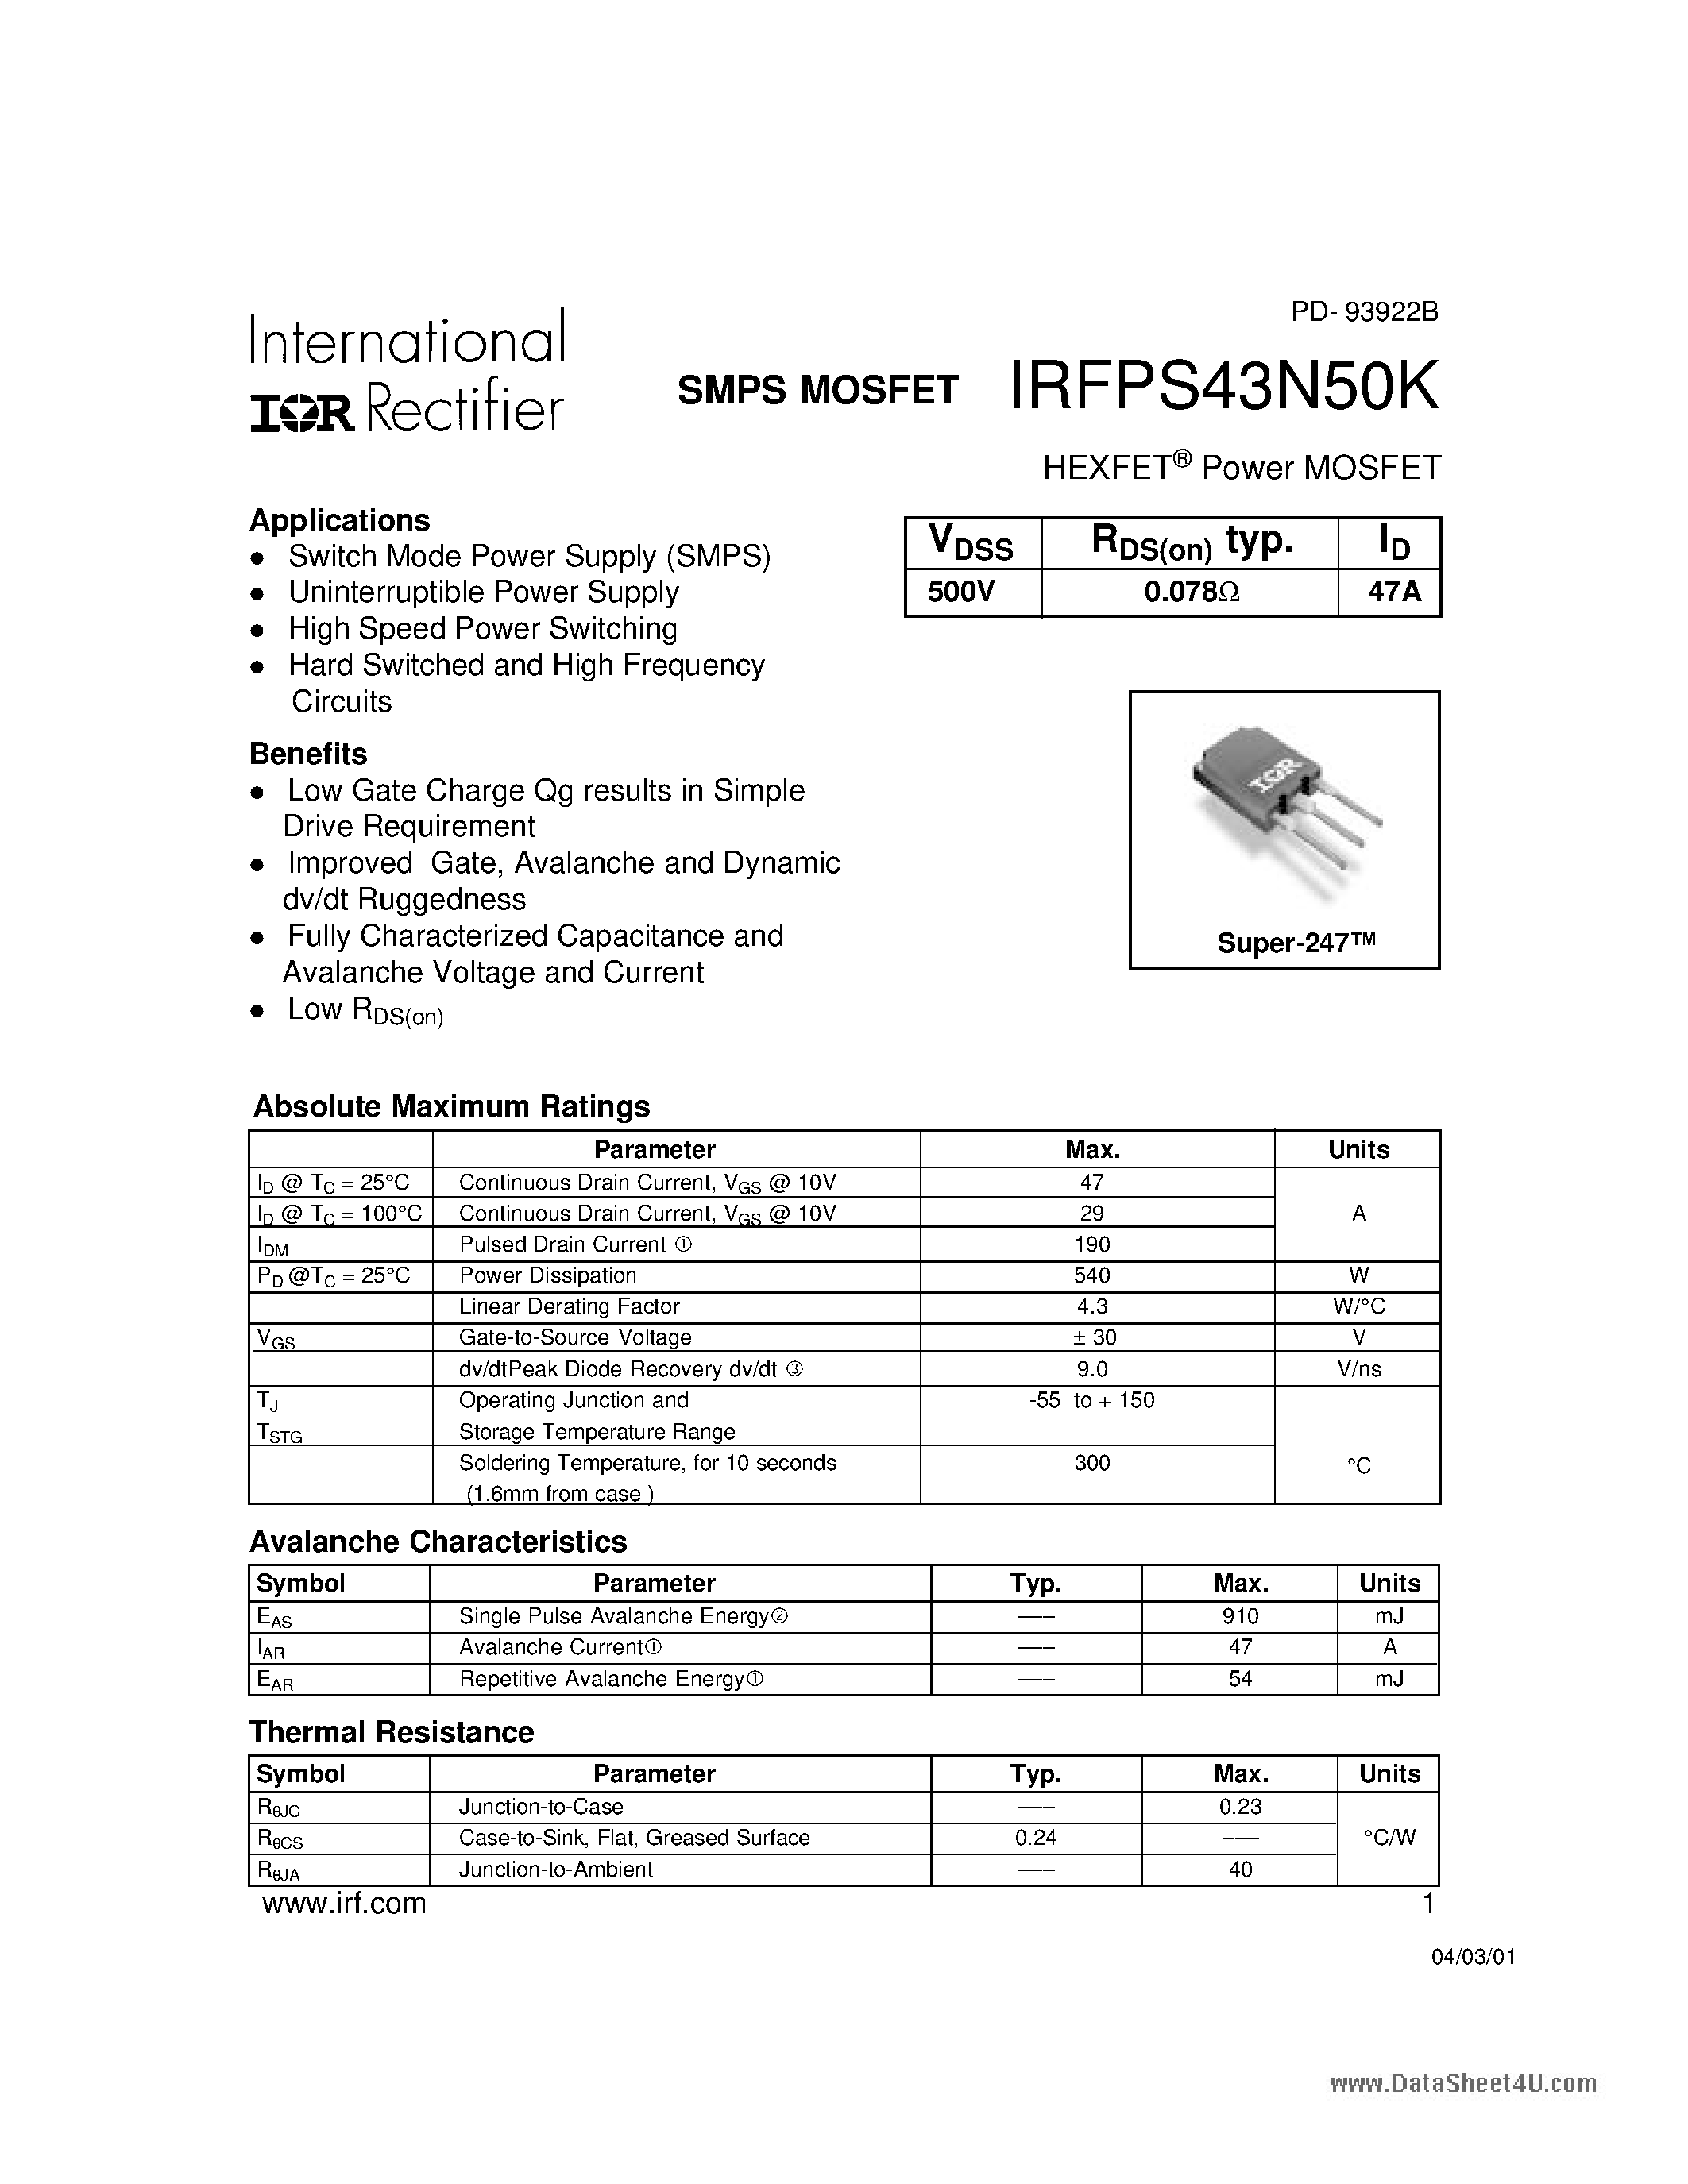 Datasheet IRFPS43N50K - HEXFET Power MOSFET page 1